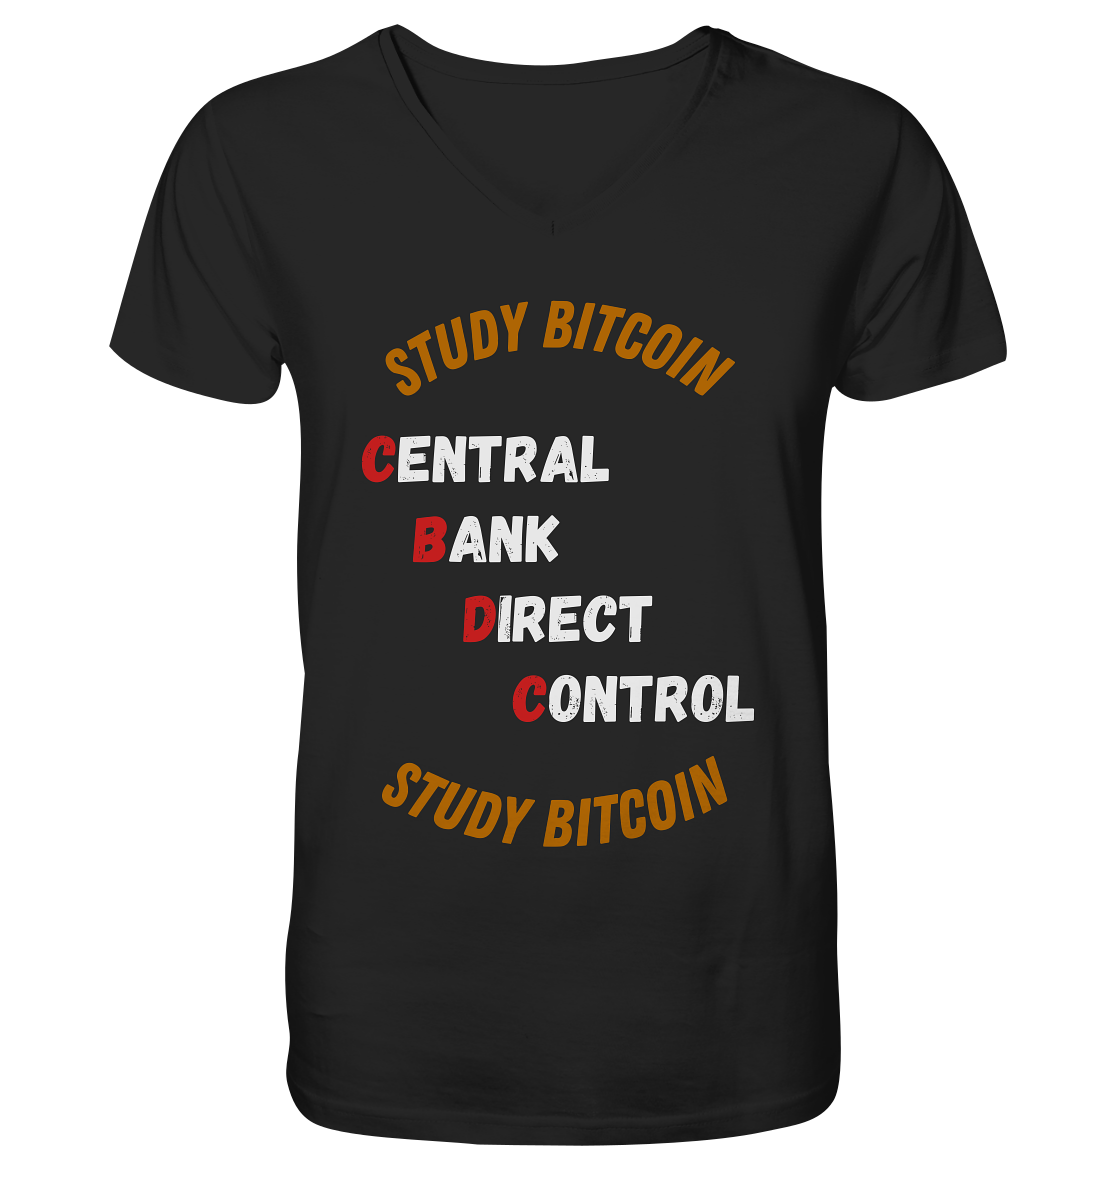 CENTRAL BANK DIRECT CONTROL - STUDY BITCOIN   - Mens Organic V-Neck Shirt